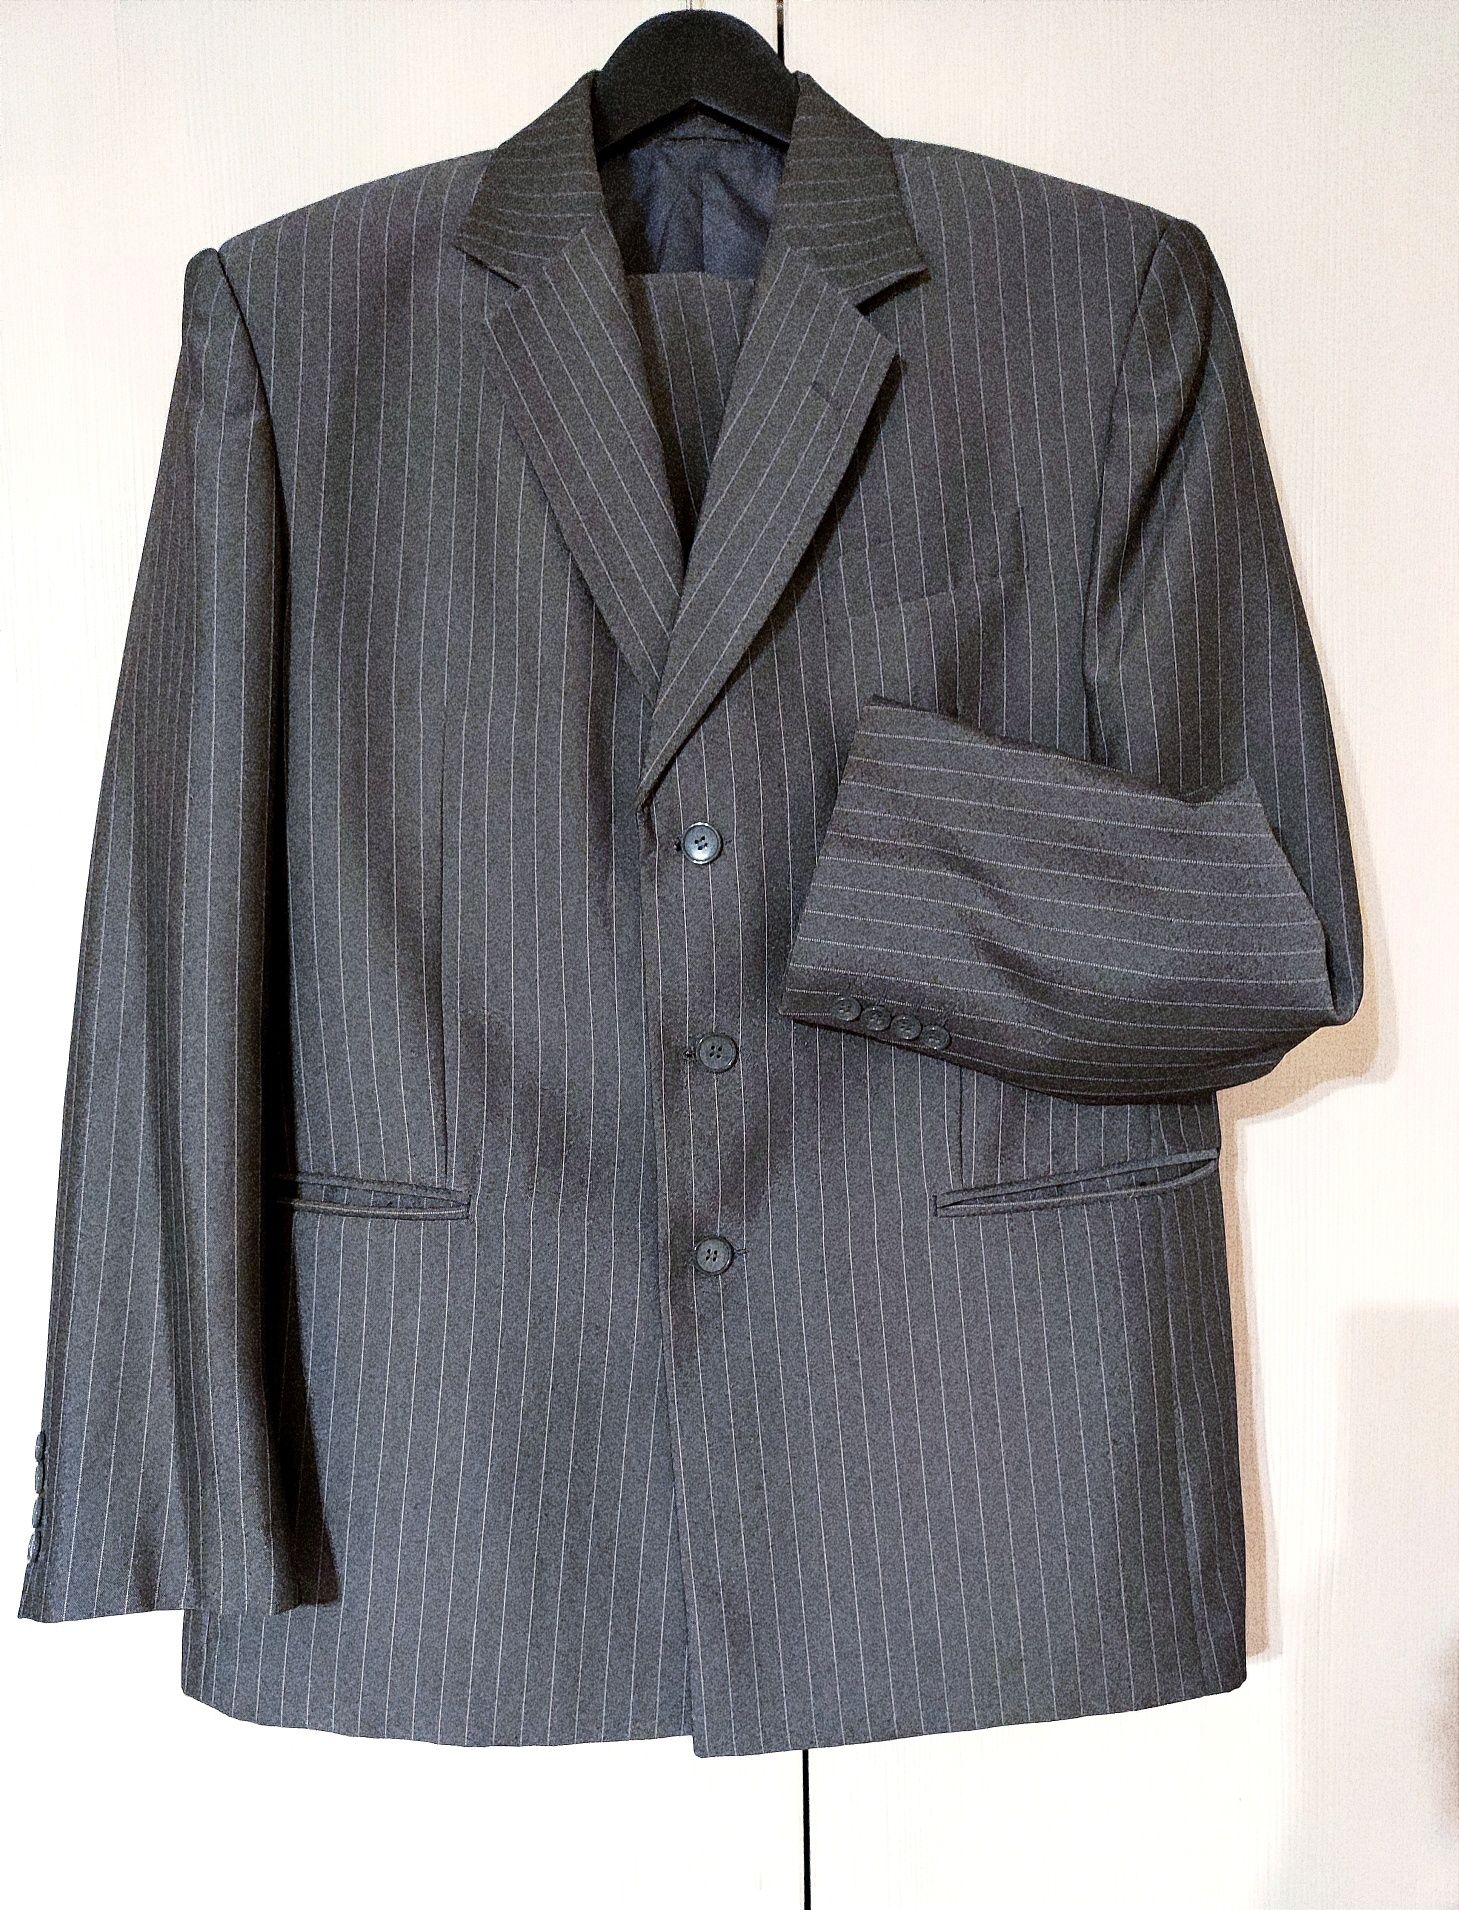 Шикарный костюм Giovanni Gilbert, рубашка Bionni moretti, туфли кожа